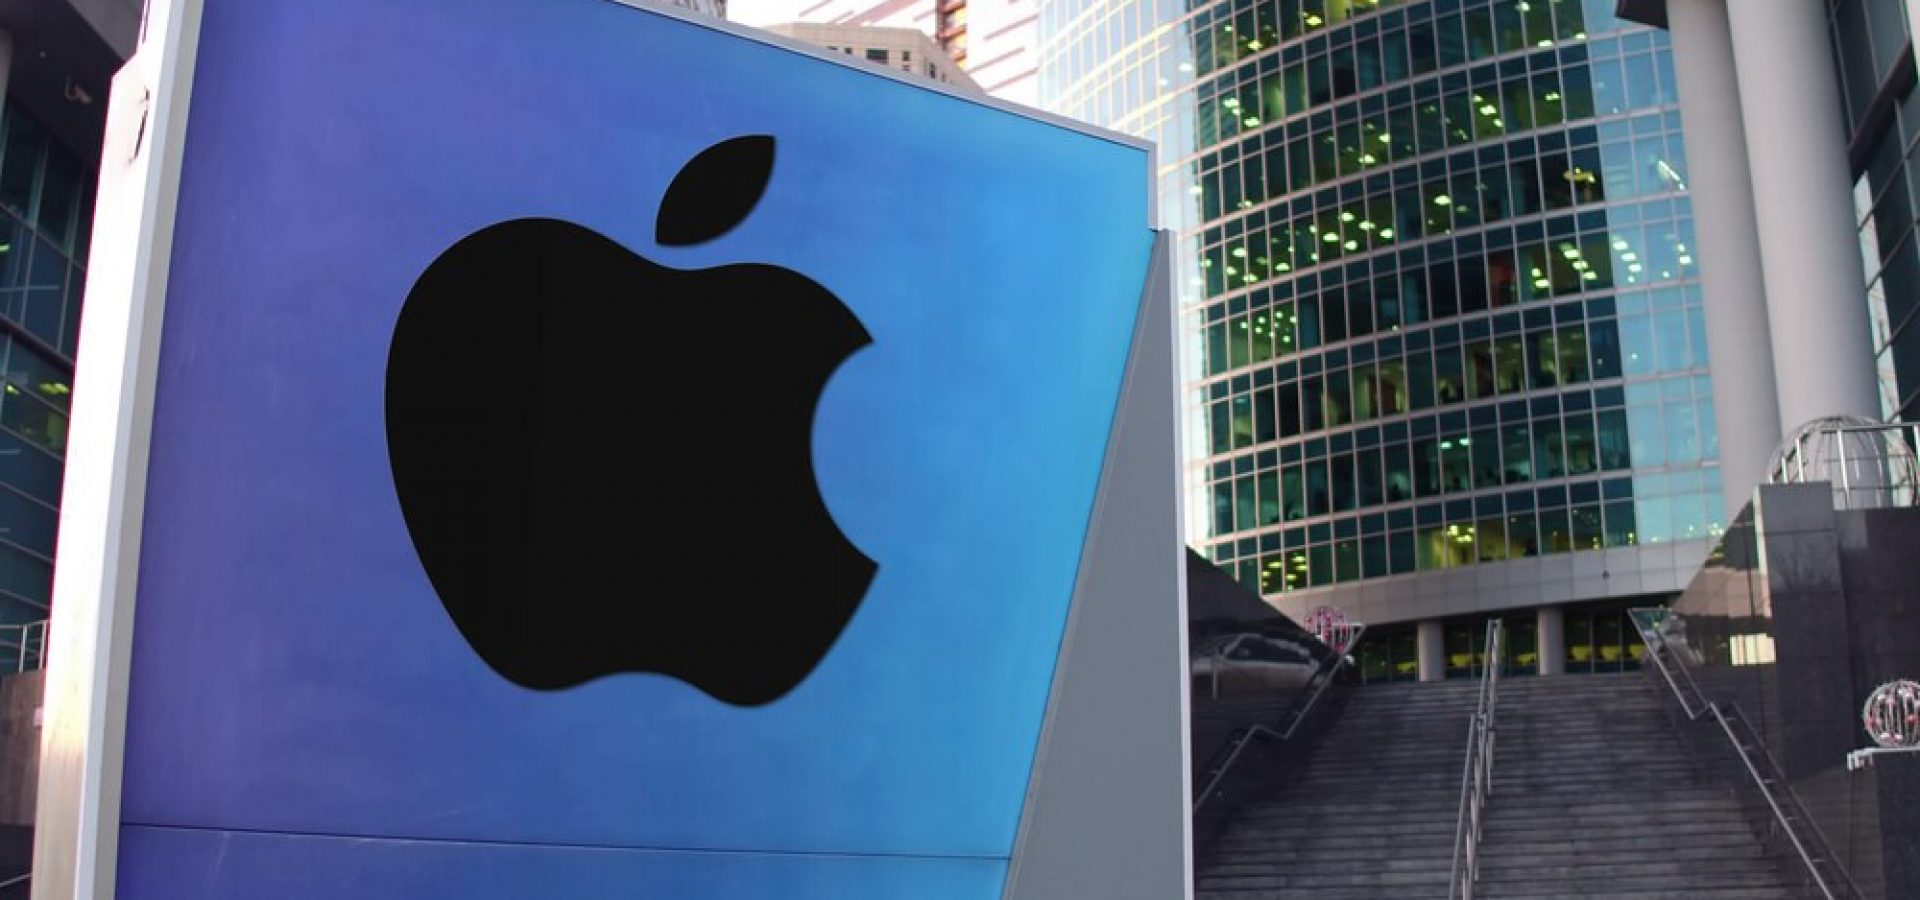 Apple: Street signage board with Apple Inc. logo.